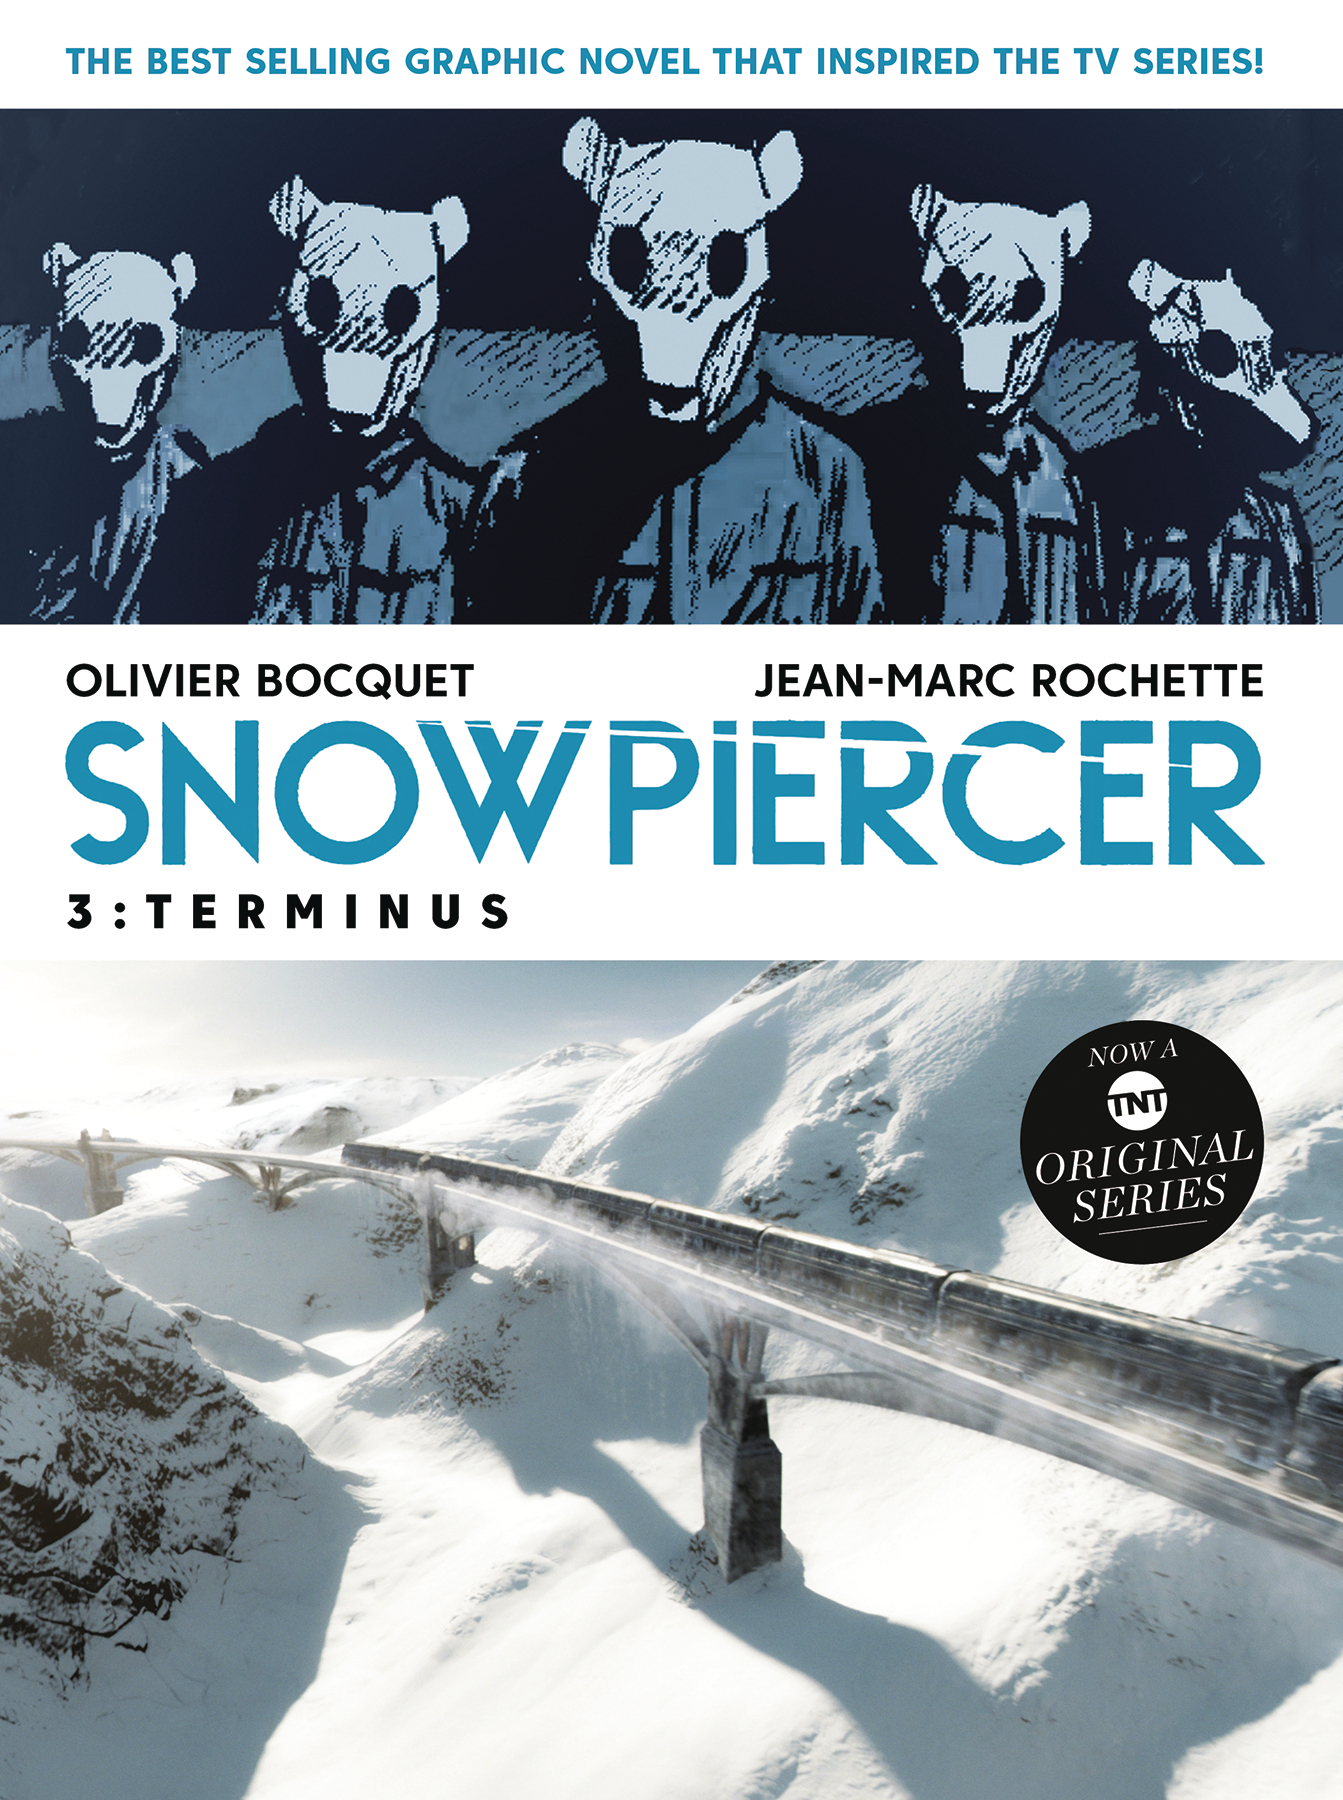 Snowpiercer Graphic Novel Volume 3 Terminus